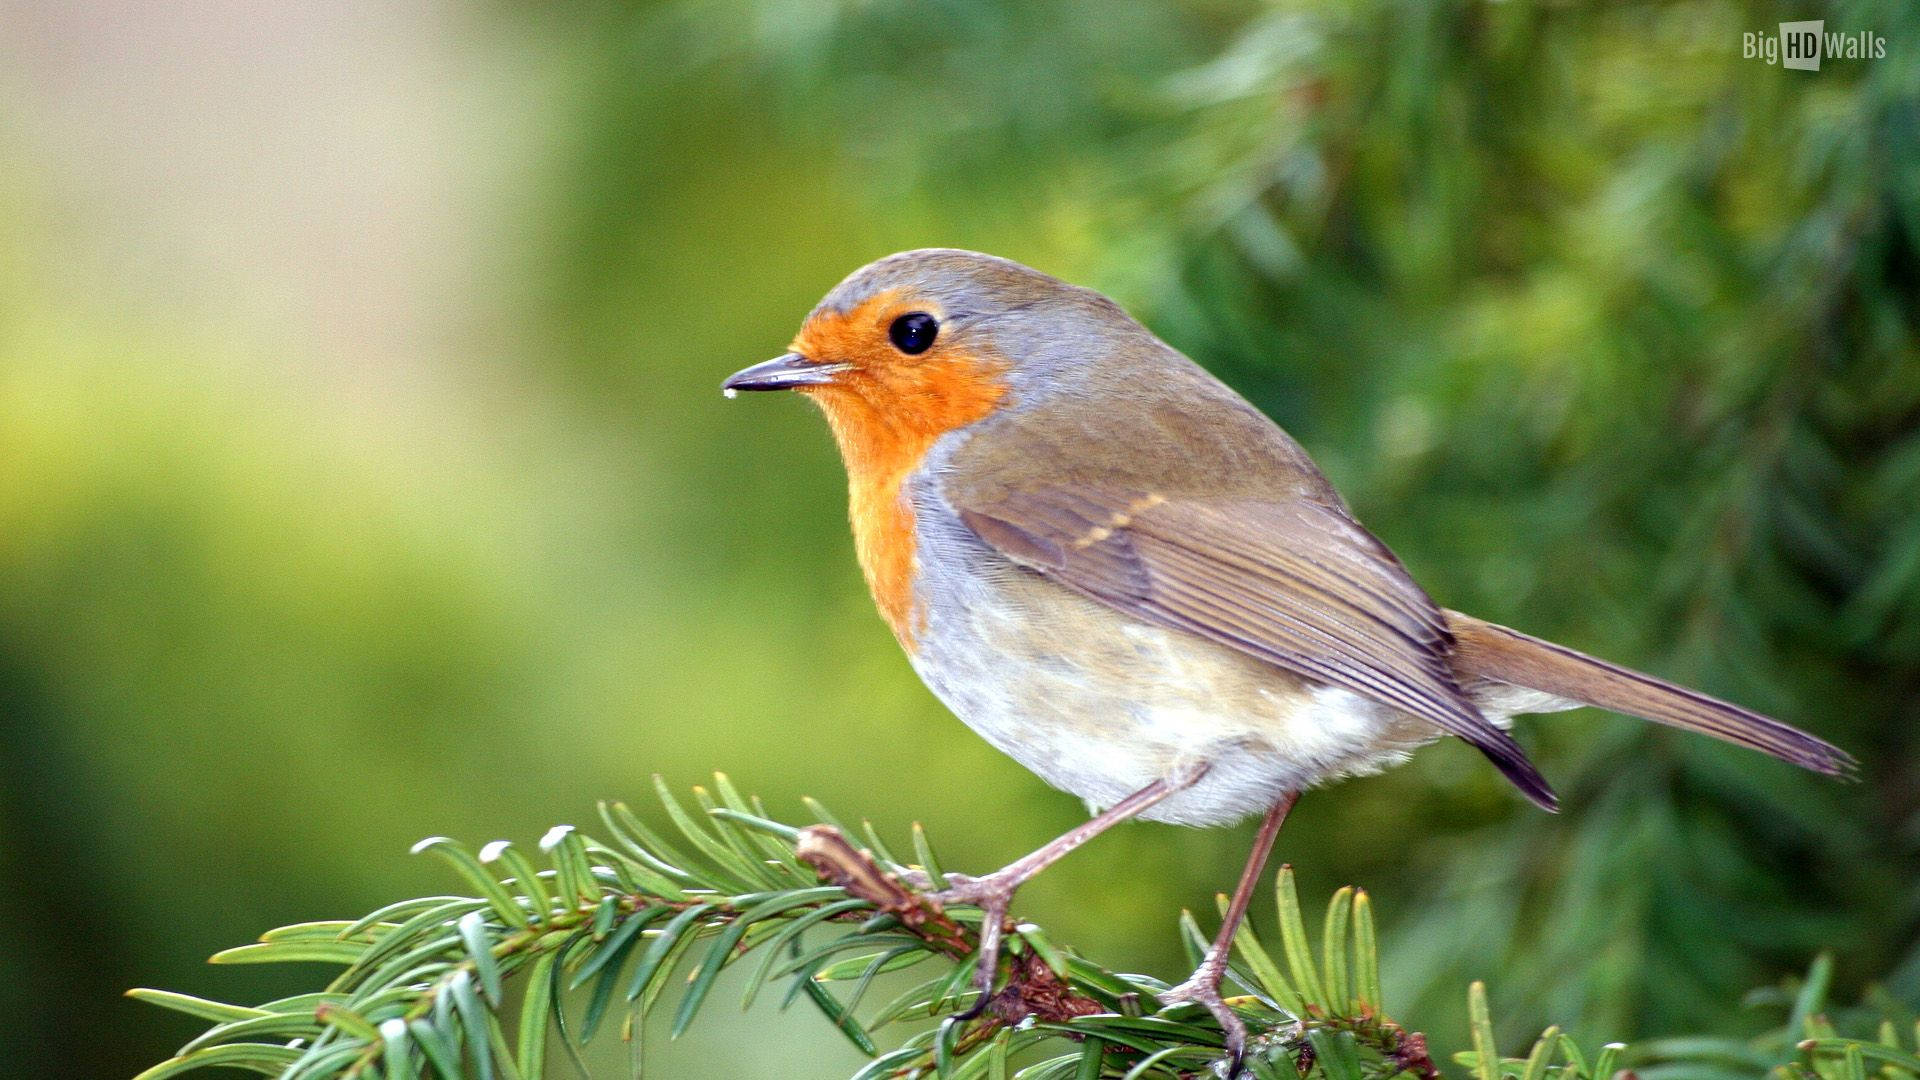 A Robin Bird Sitting On A Pine Tree Branch Background